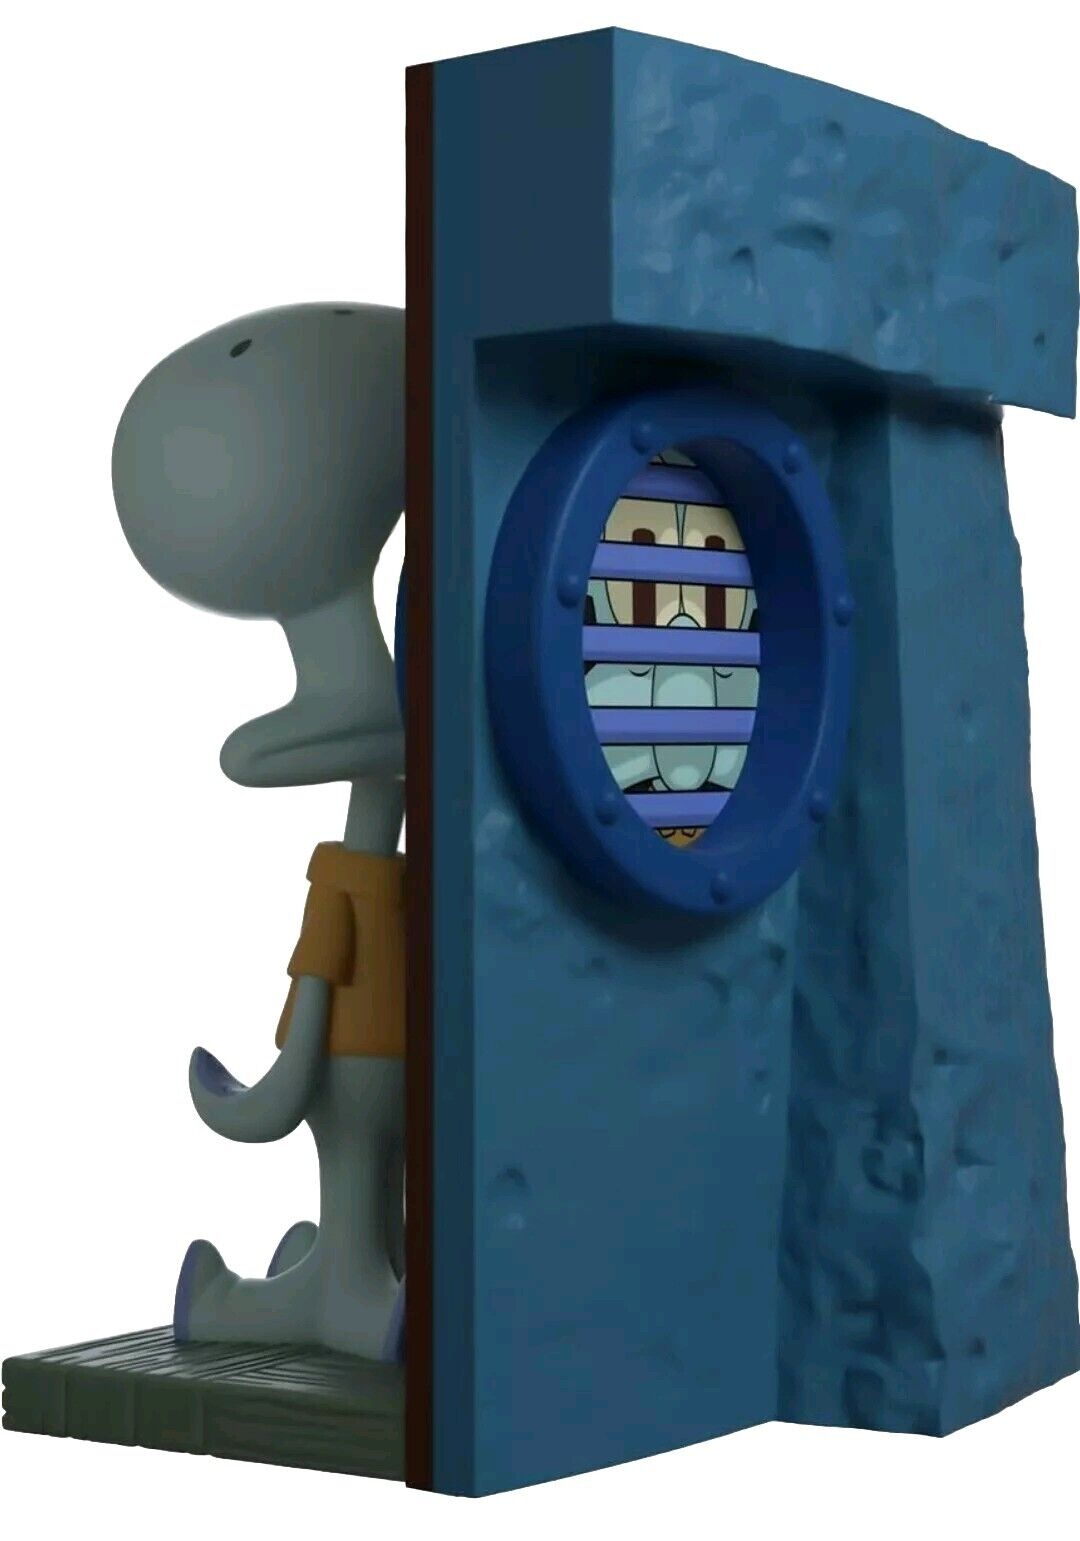 Youtooz Spongebob Squarepants Inside Squidward Vinyl Figure Collectible New